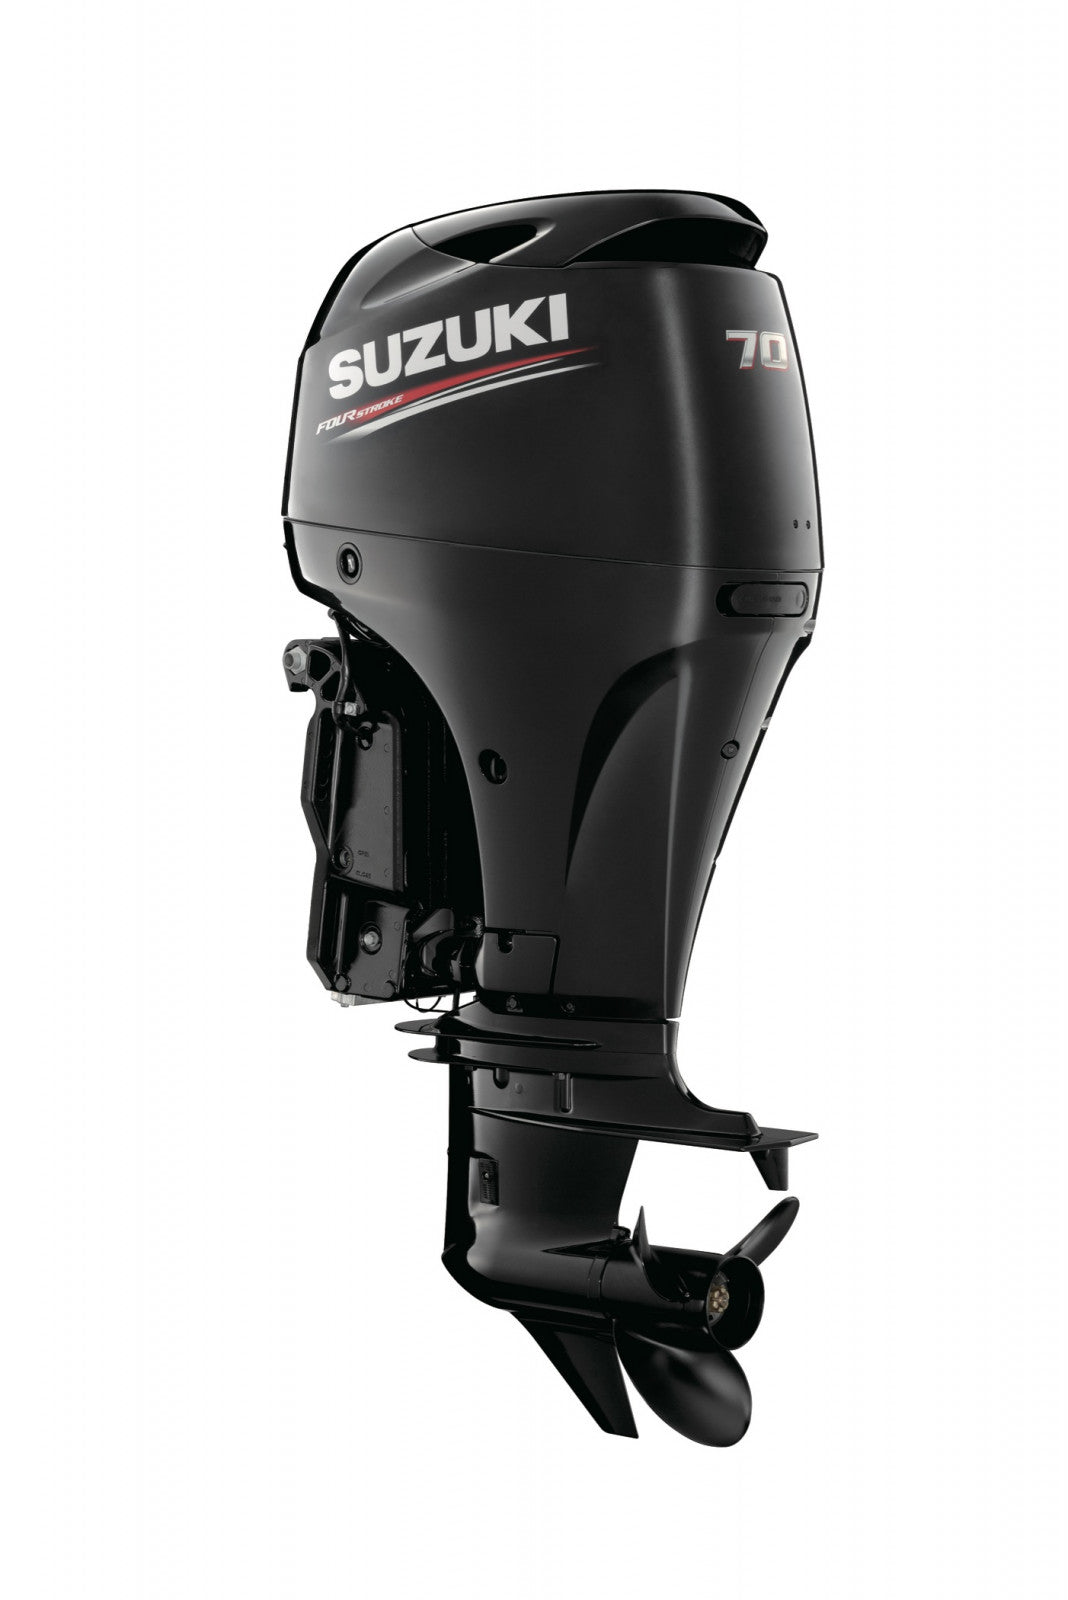 SUZUKI 70HP DF70ATL LONG SHAFT OUTBOARD ENGINE